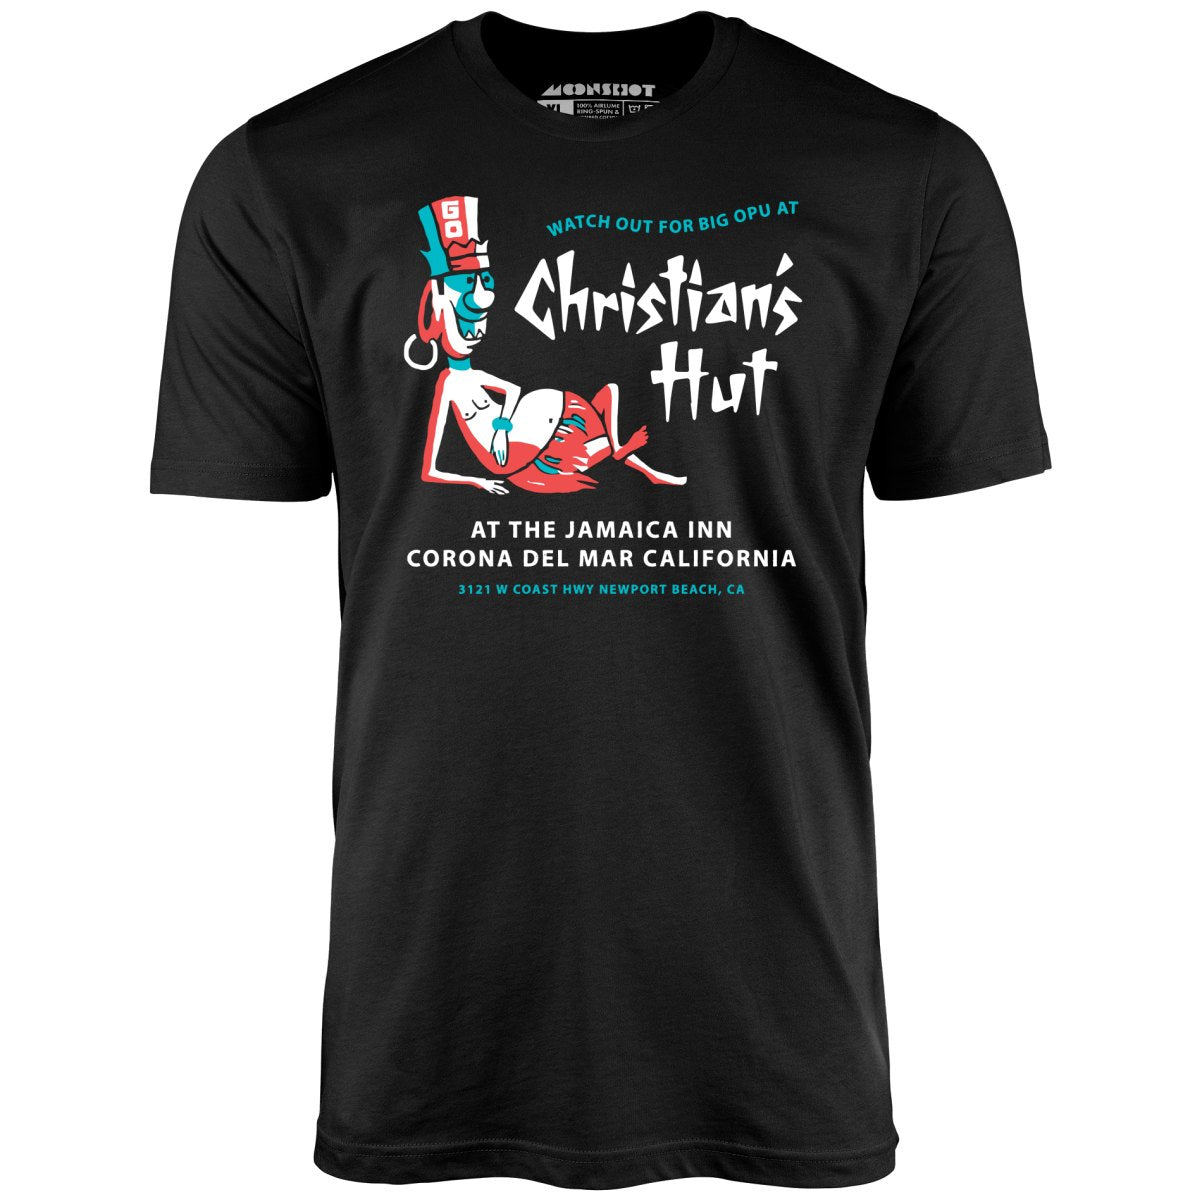 Christian's Hut - Corona Del Mar, CA - Vintage Tiki Bar - Unisex T-Shirt